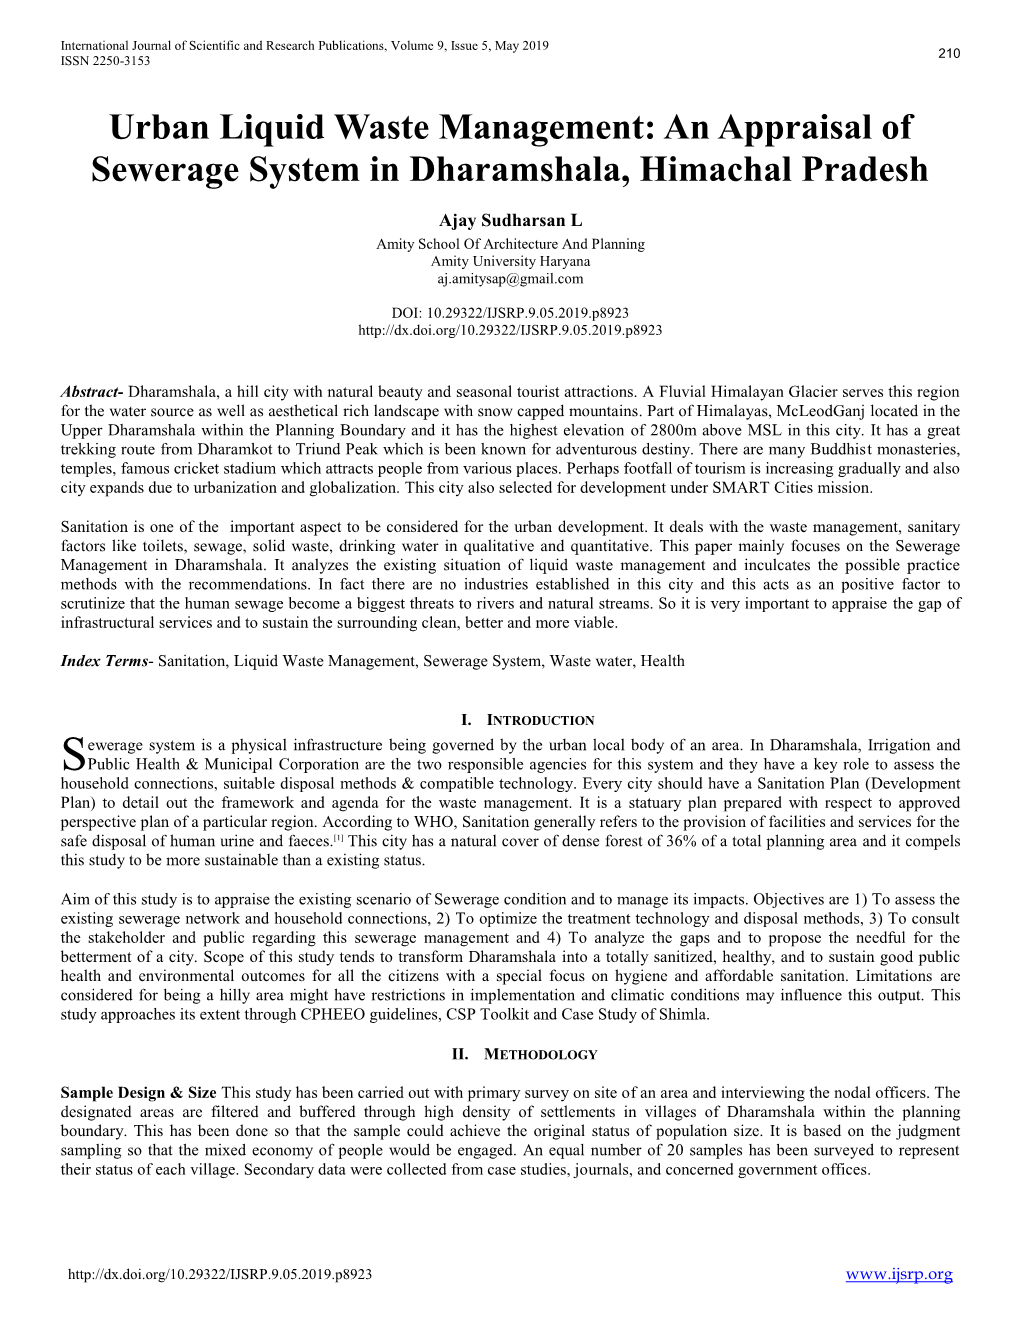 An Appraisal of Sewerage System in Dharamshala, Himachal Pradesh